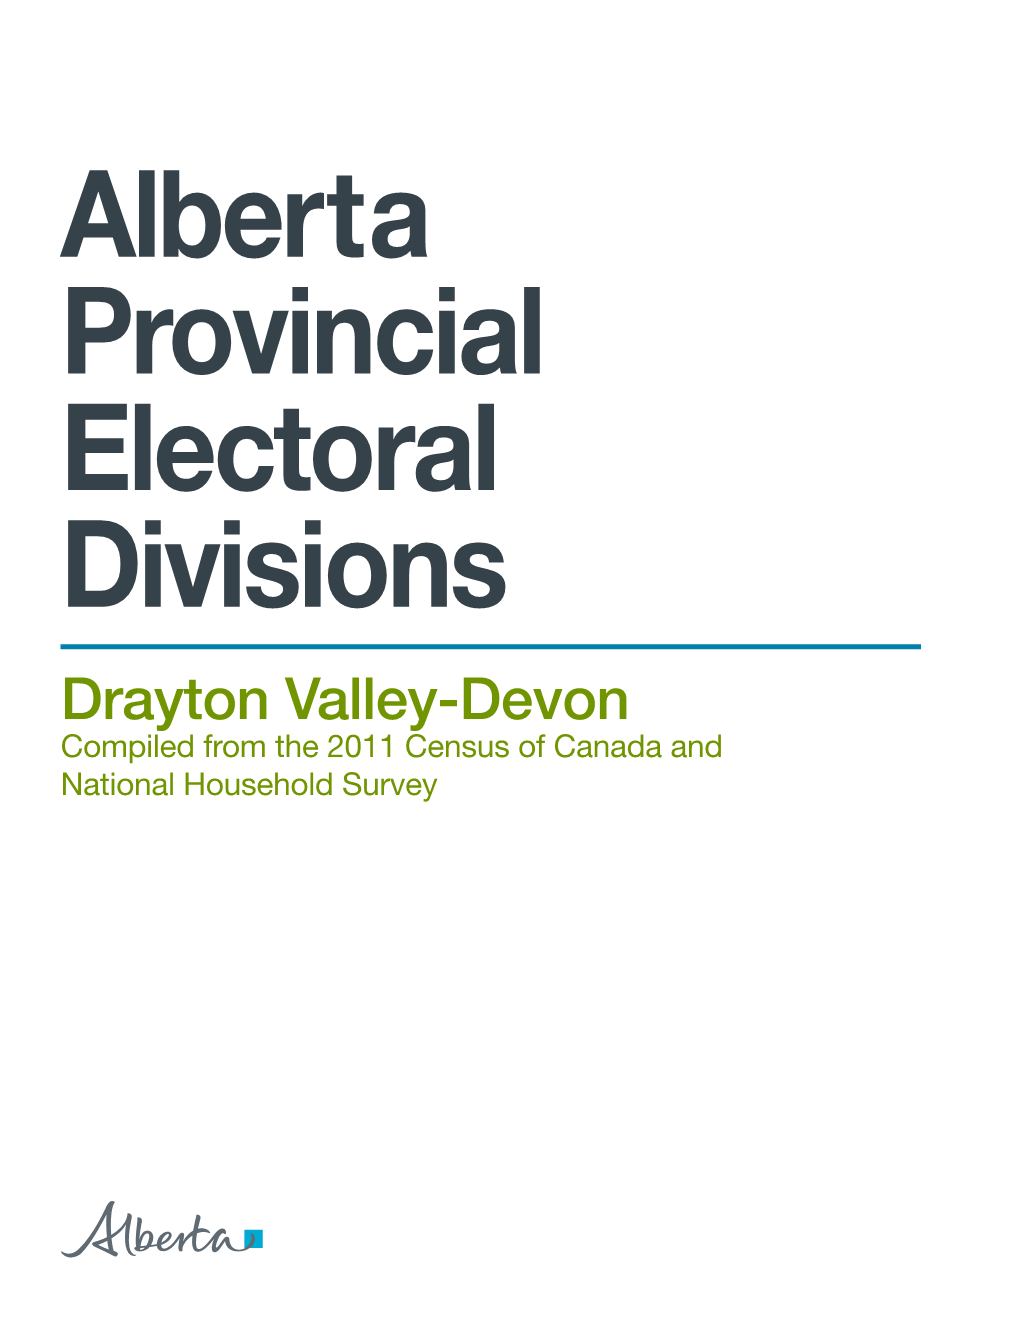 Alberta Provincial Electoral Division Profile And